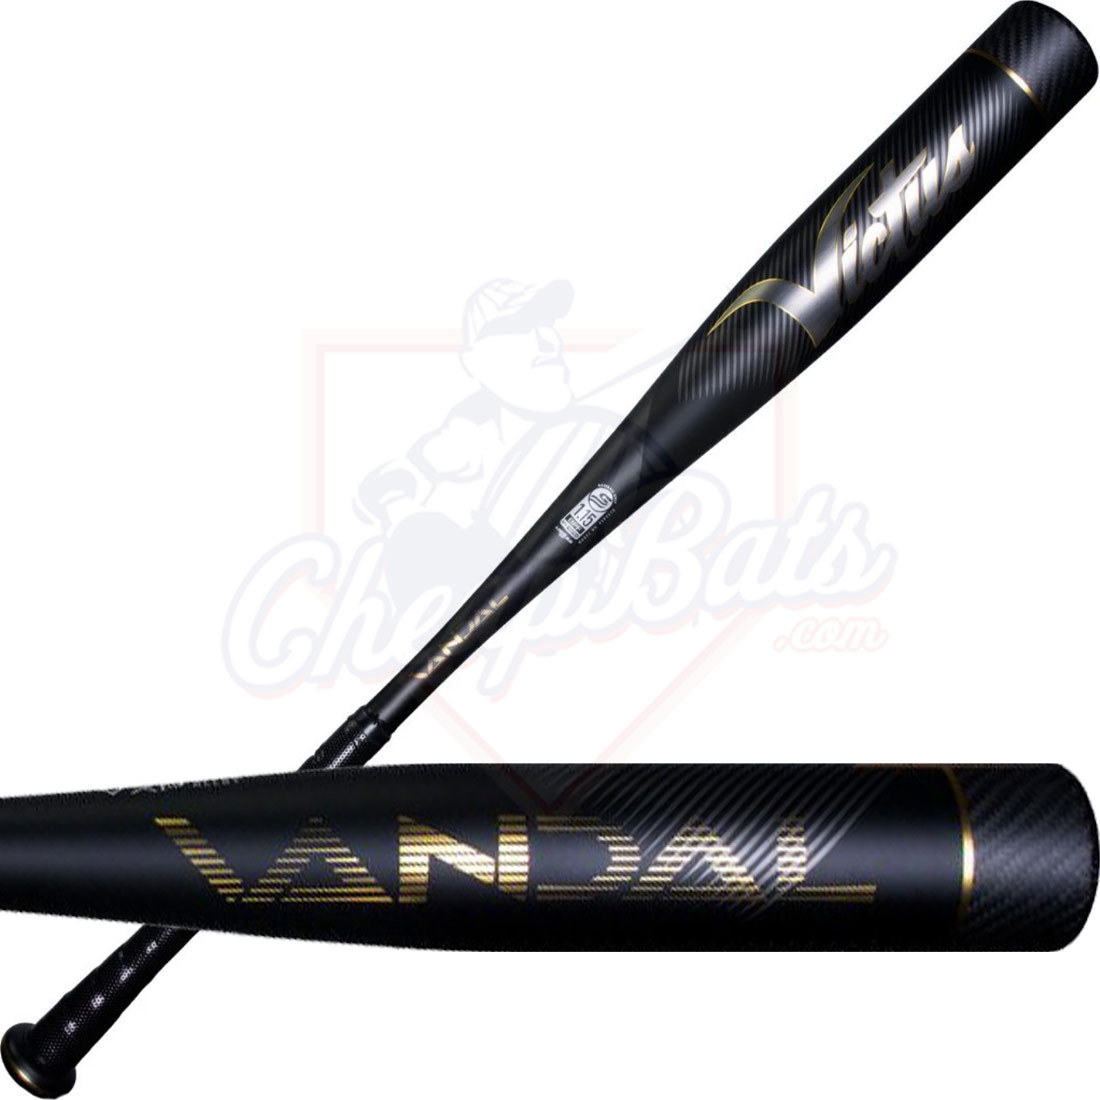 2022 Victus Vandal 2 Youth USSSA Baseball Bat -8oz VSBV2X8